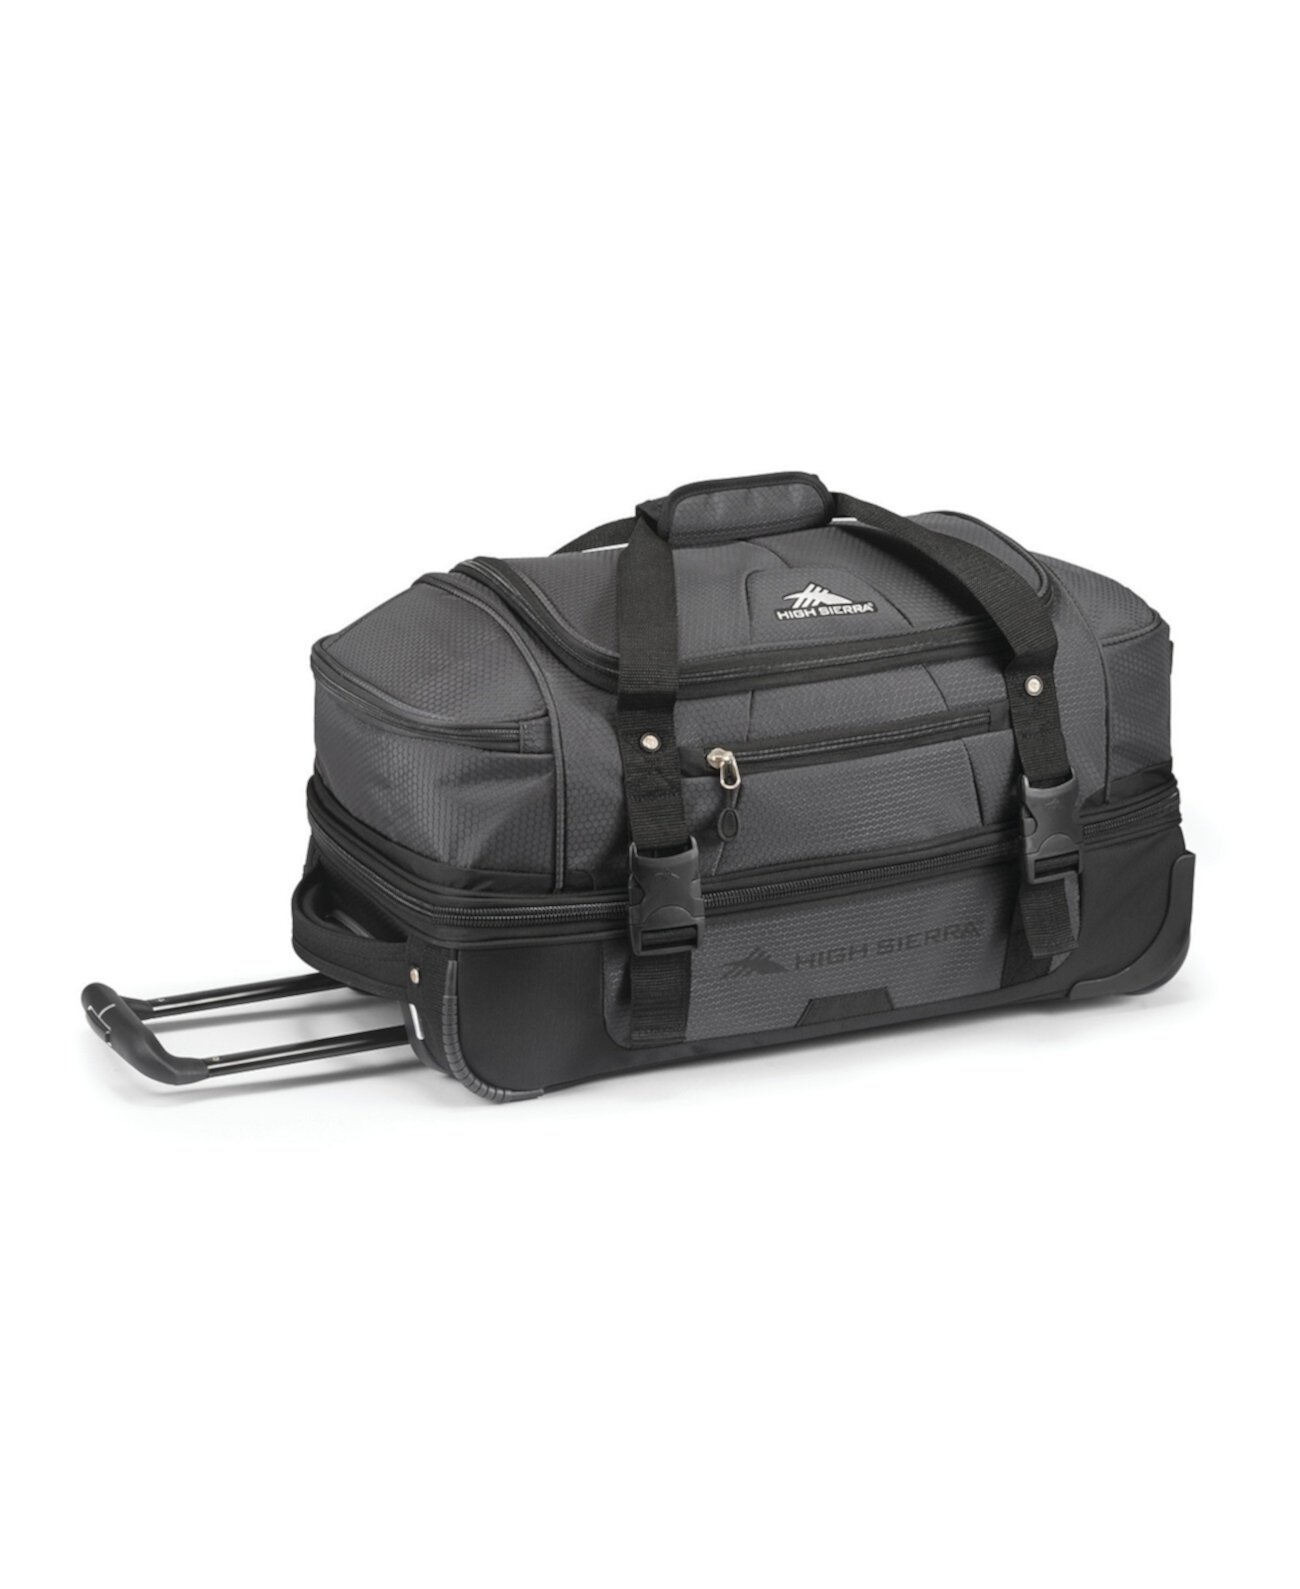 22-дюймовая колесная спортивная сумка Fairlead High Sierra